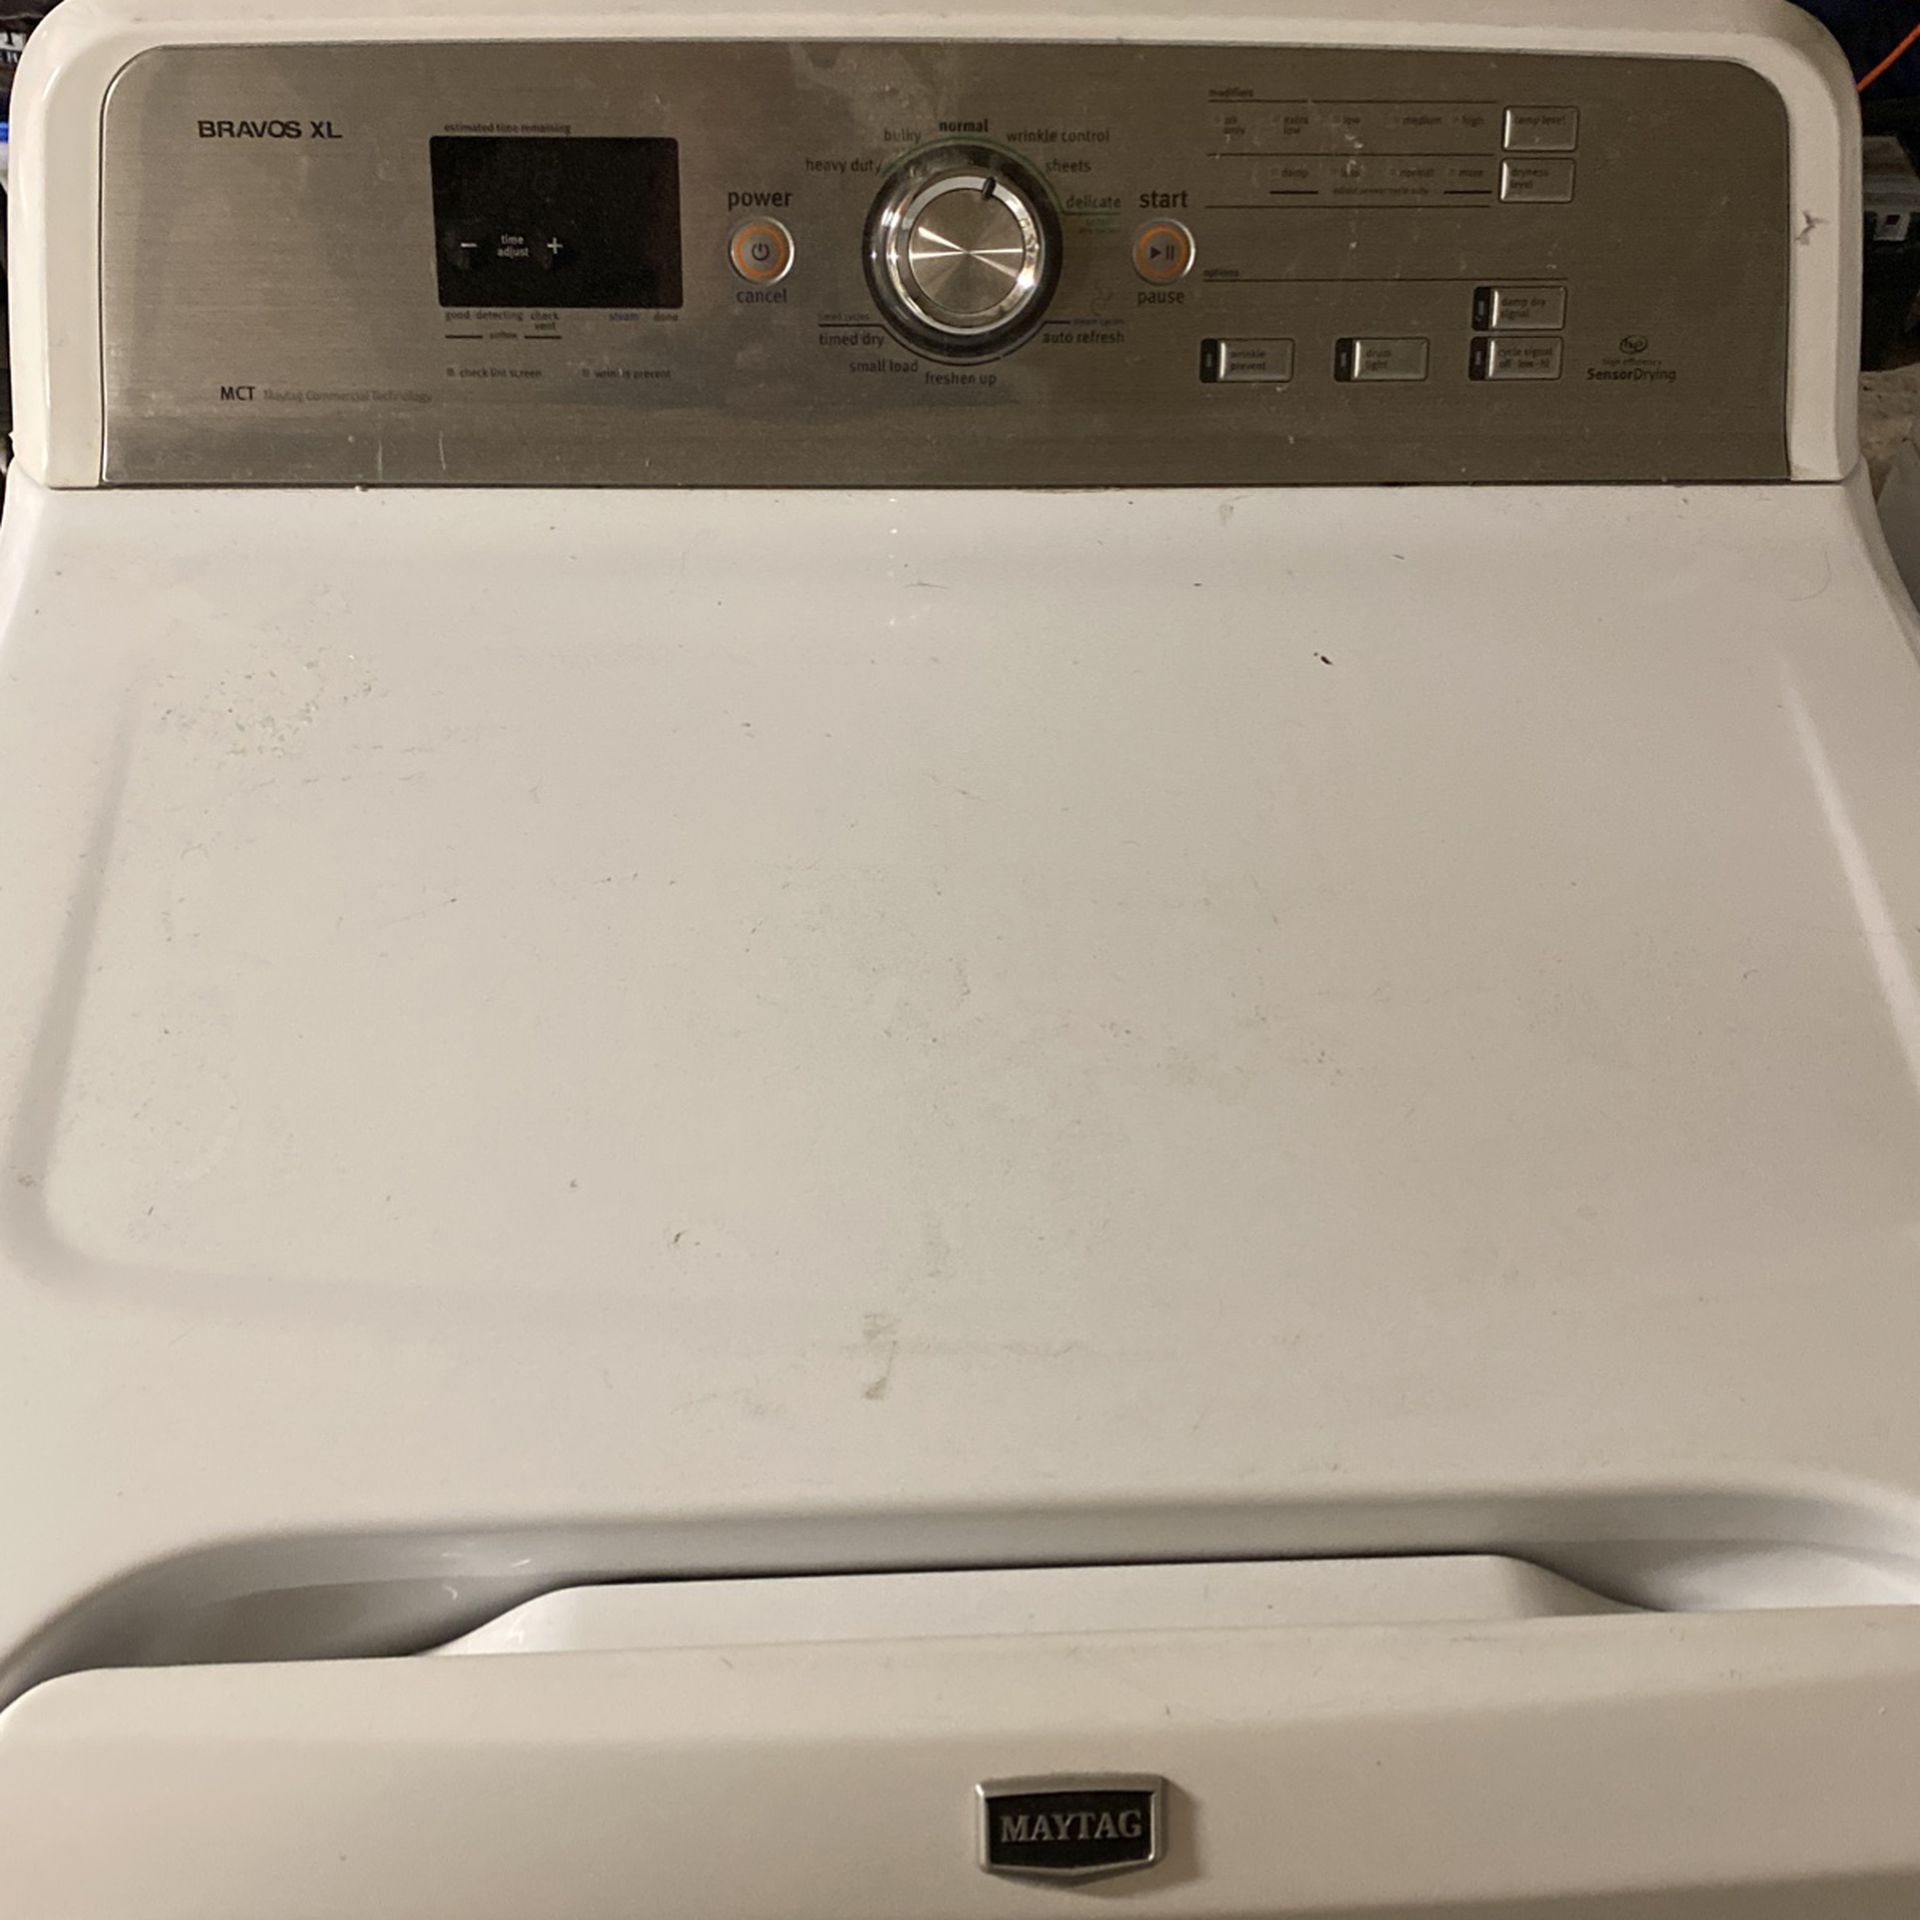 Maytag - Bravos XL Washer & Dryer